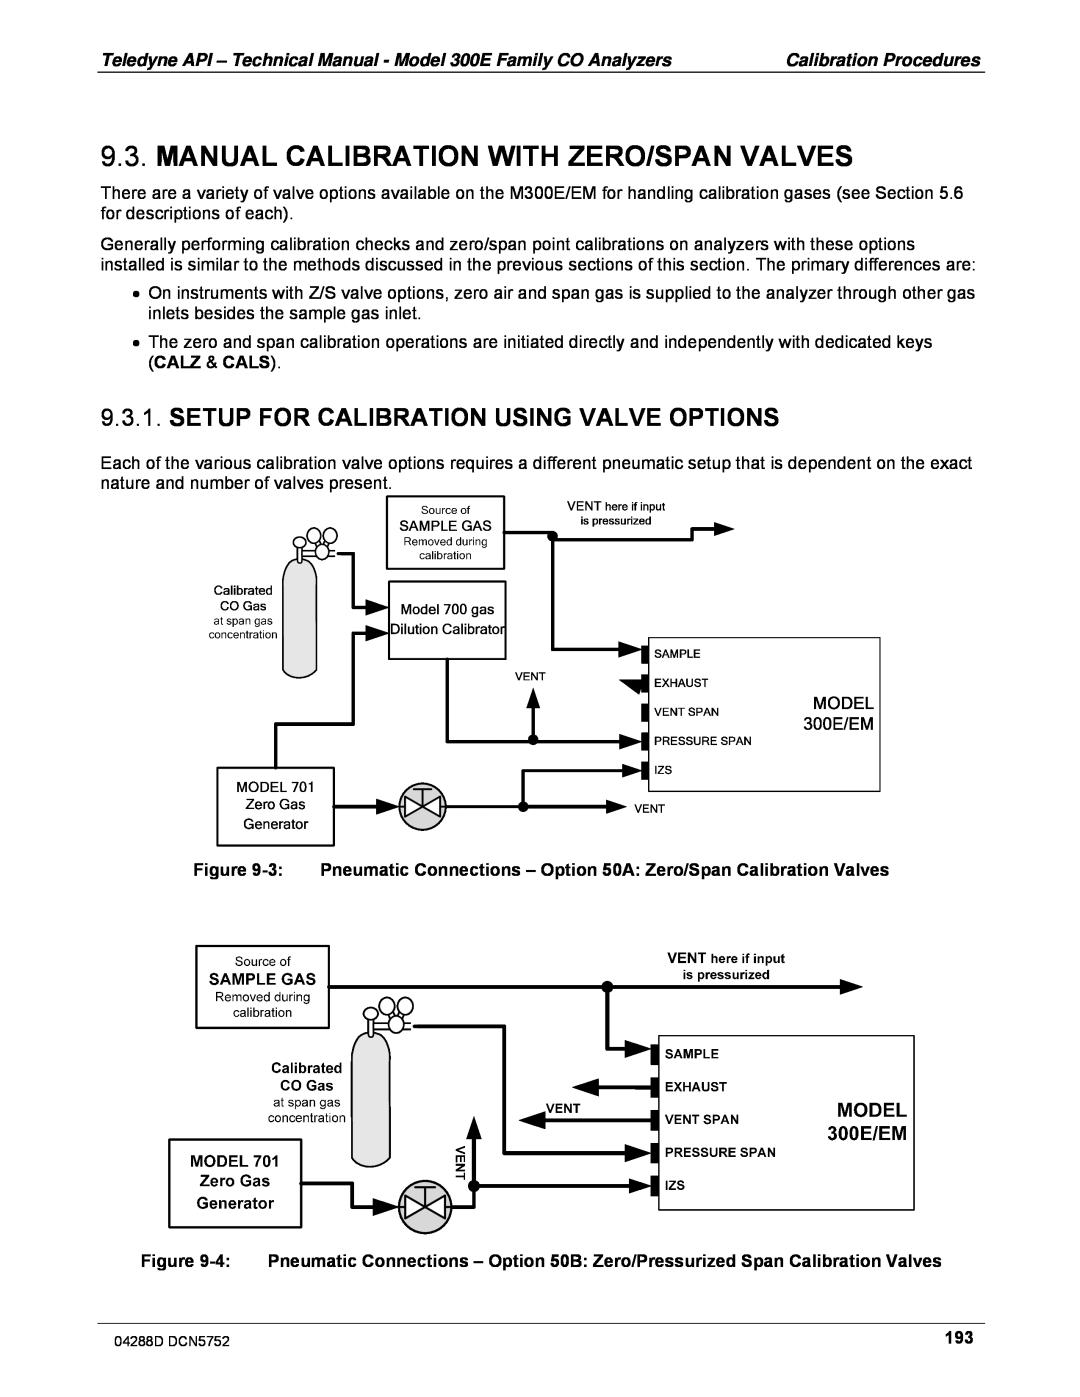 Teledyne M300EM operation manual Manual Calibration With Zero/Span Valves, Setup For Calibration Using Valve Options 